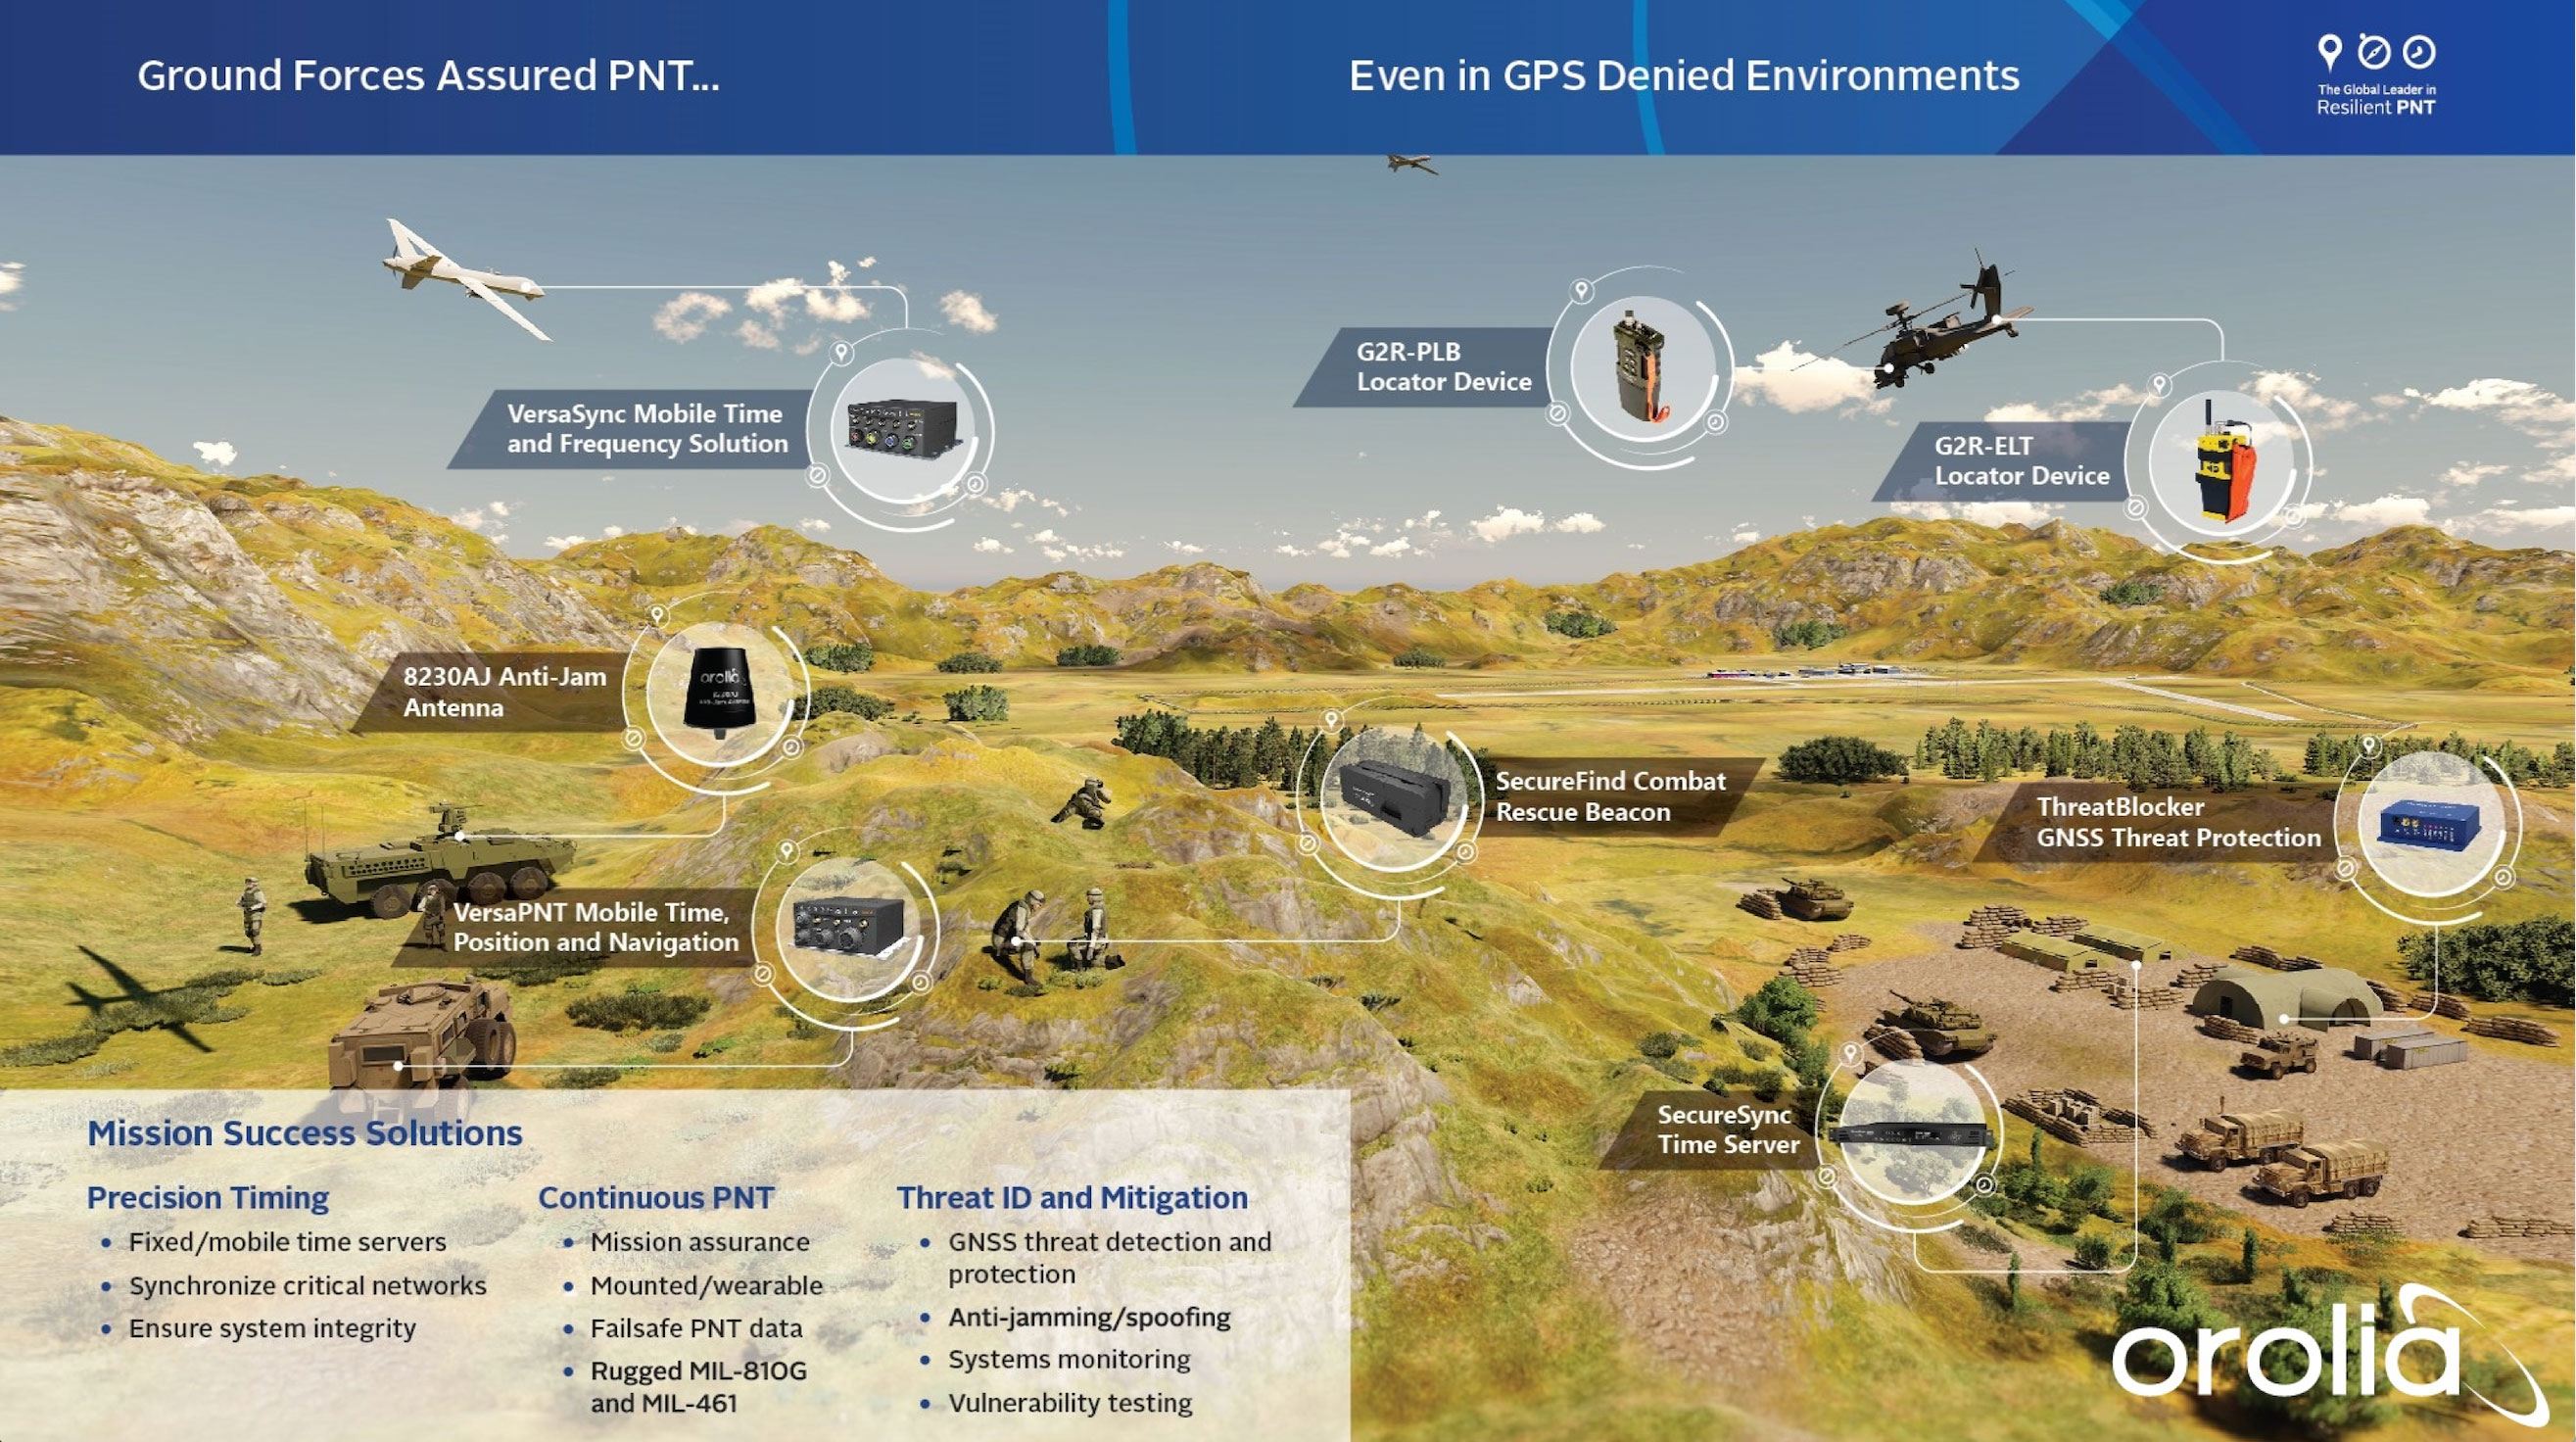 Ground Forces Assured PNT Landscape. Orolia’s Assured PNT provides mission success solutions in GPS denied environments.